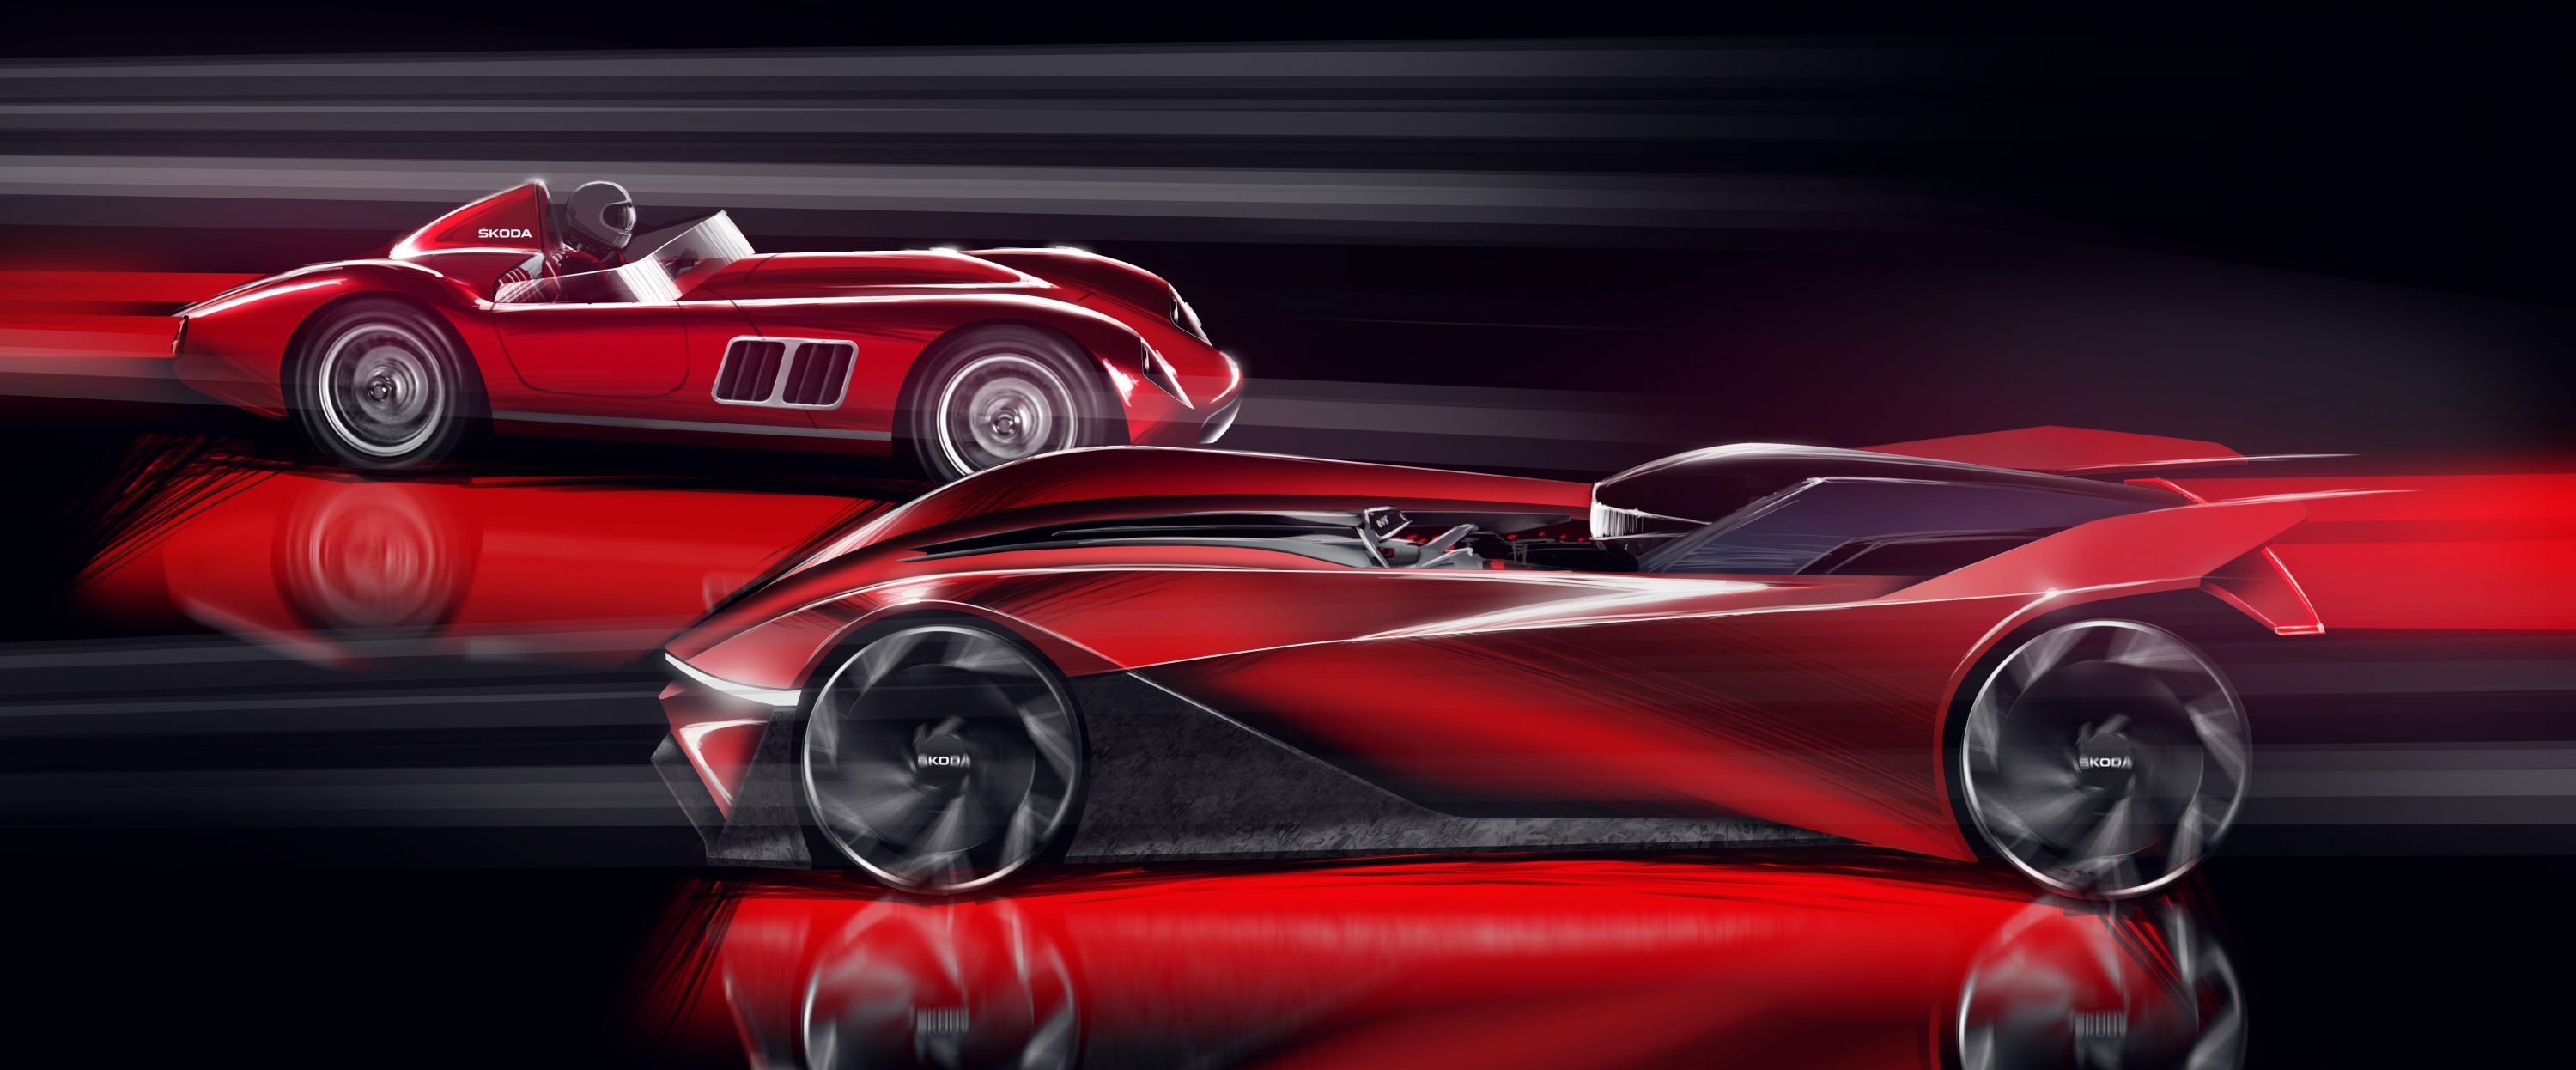 Ferrari Vision GT teased for Gran Turismo 7